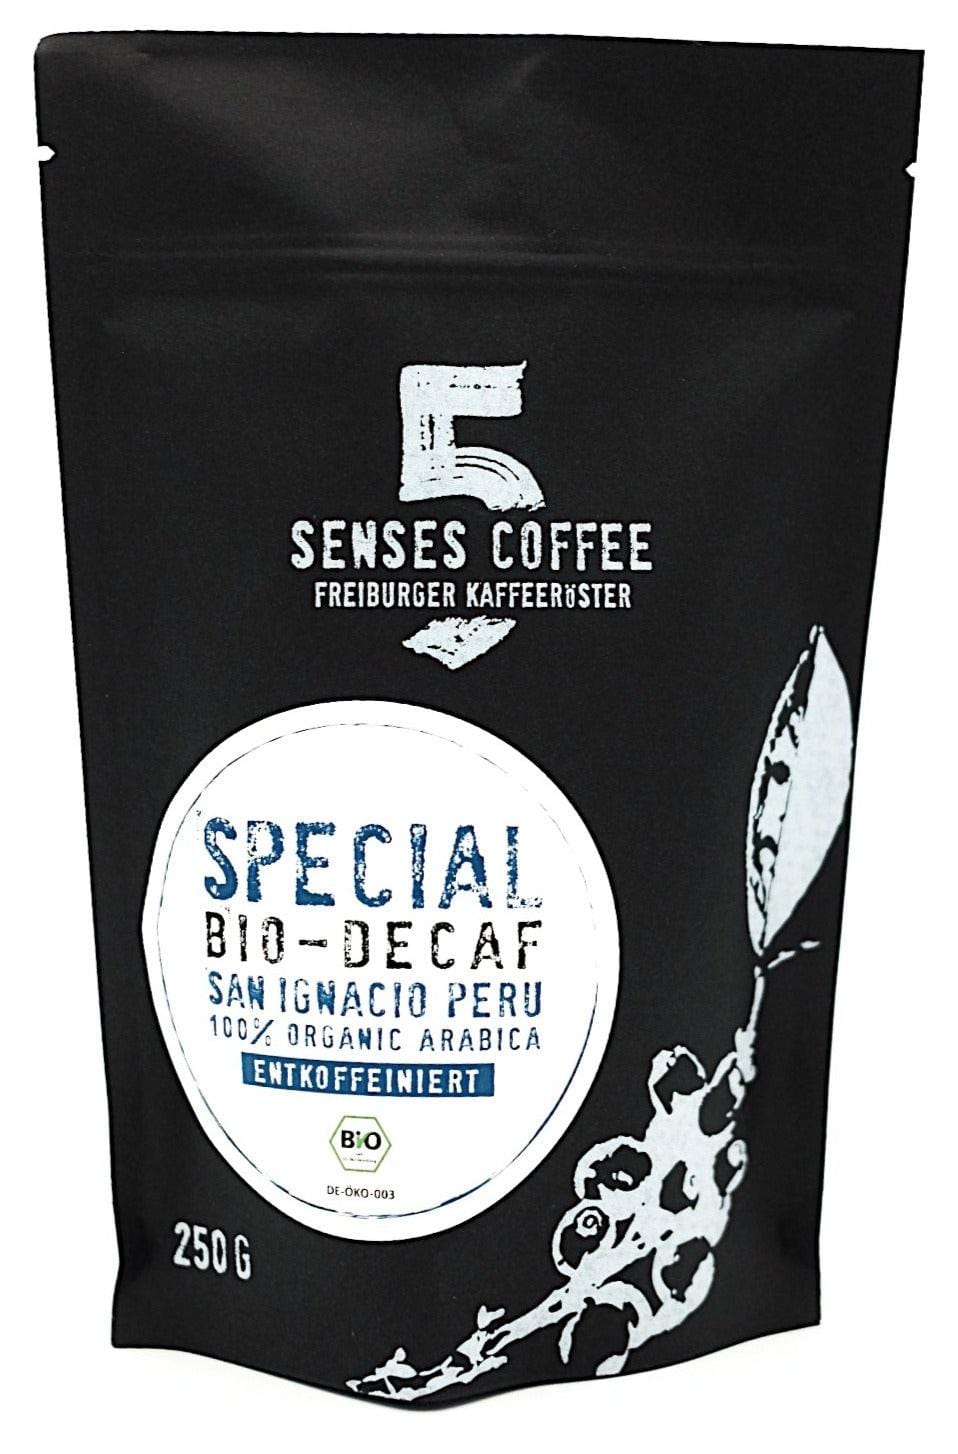 5 SENSES ORGANIC PERU BIO-DECAF 5 Senses Coffee